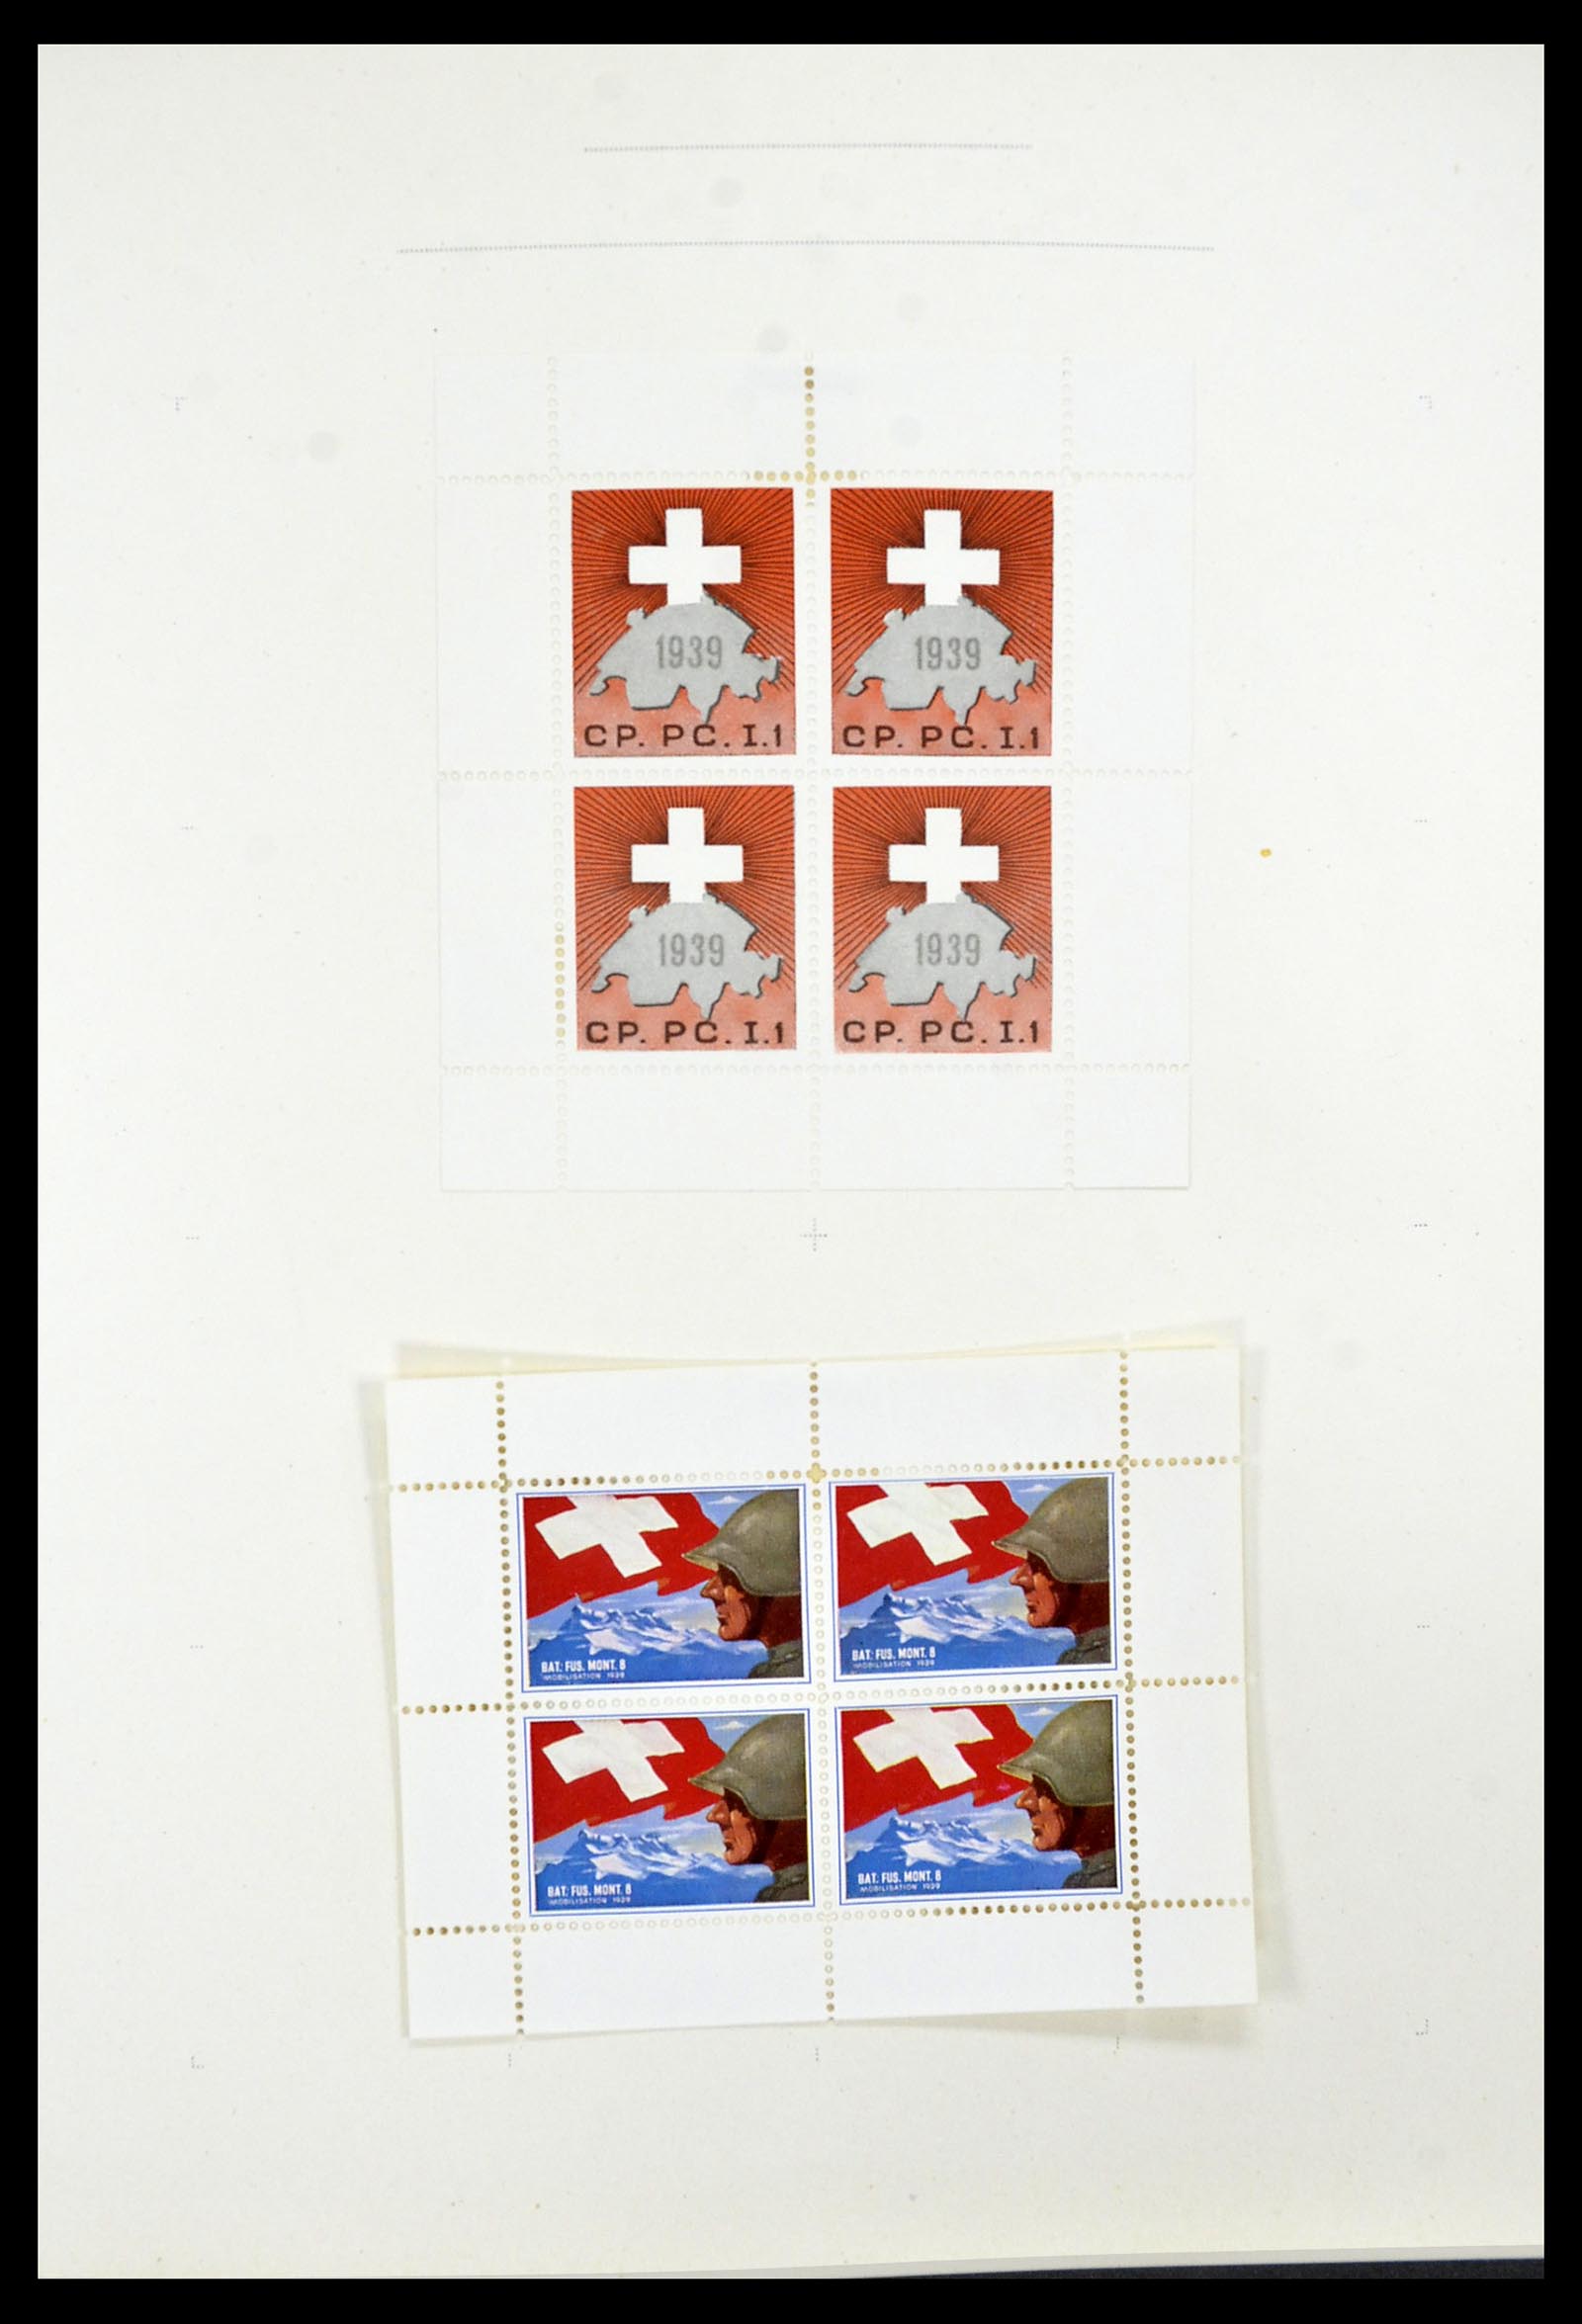 34234 038 - Stamp collection 34234 Switzerland soldier stamps 1939-1945.